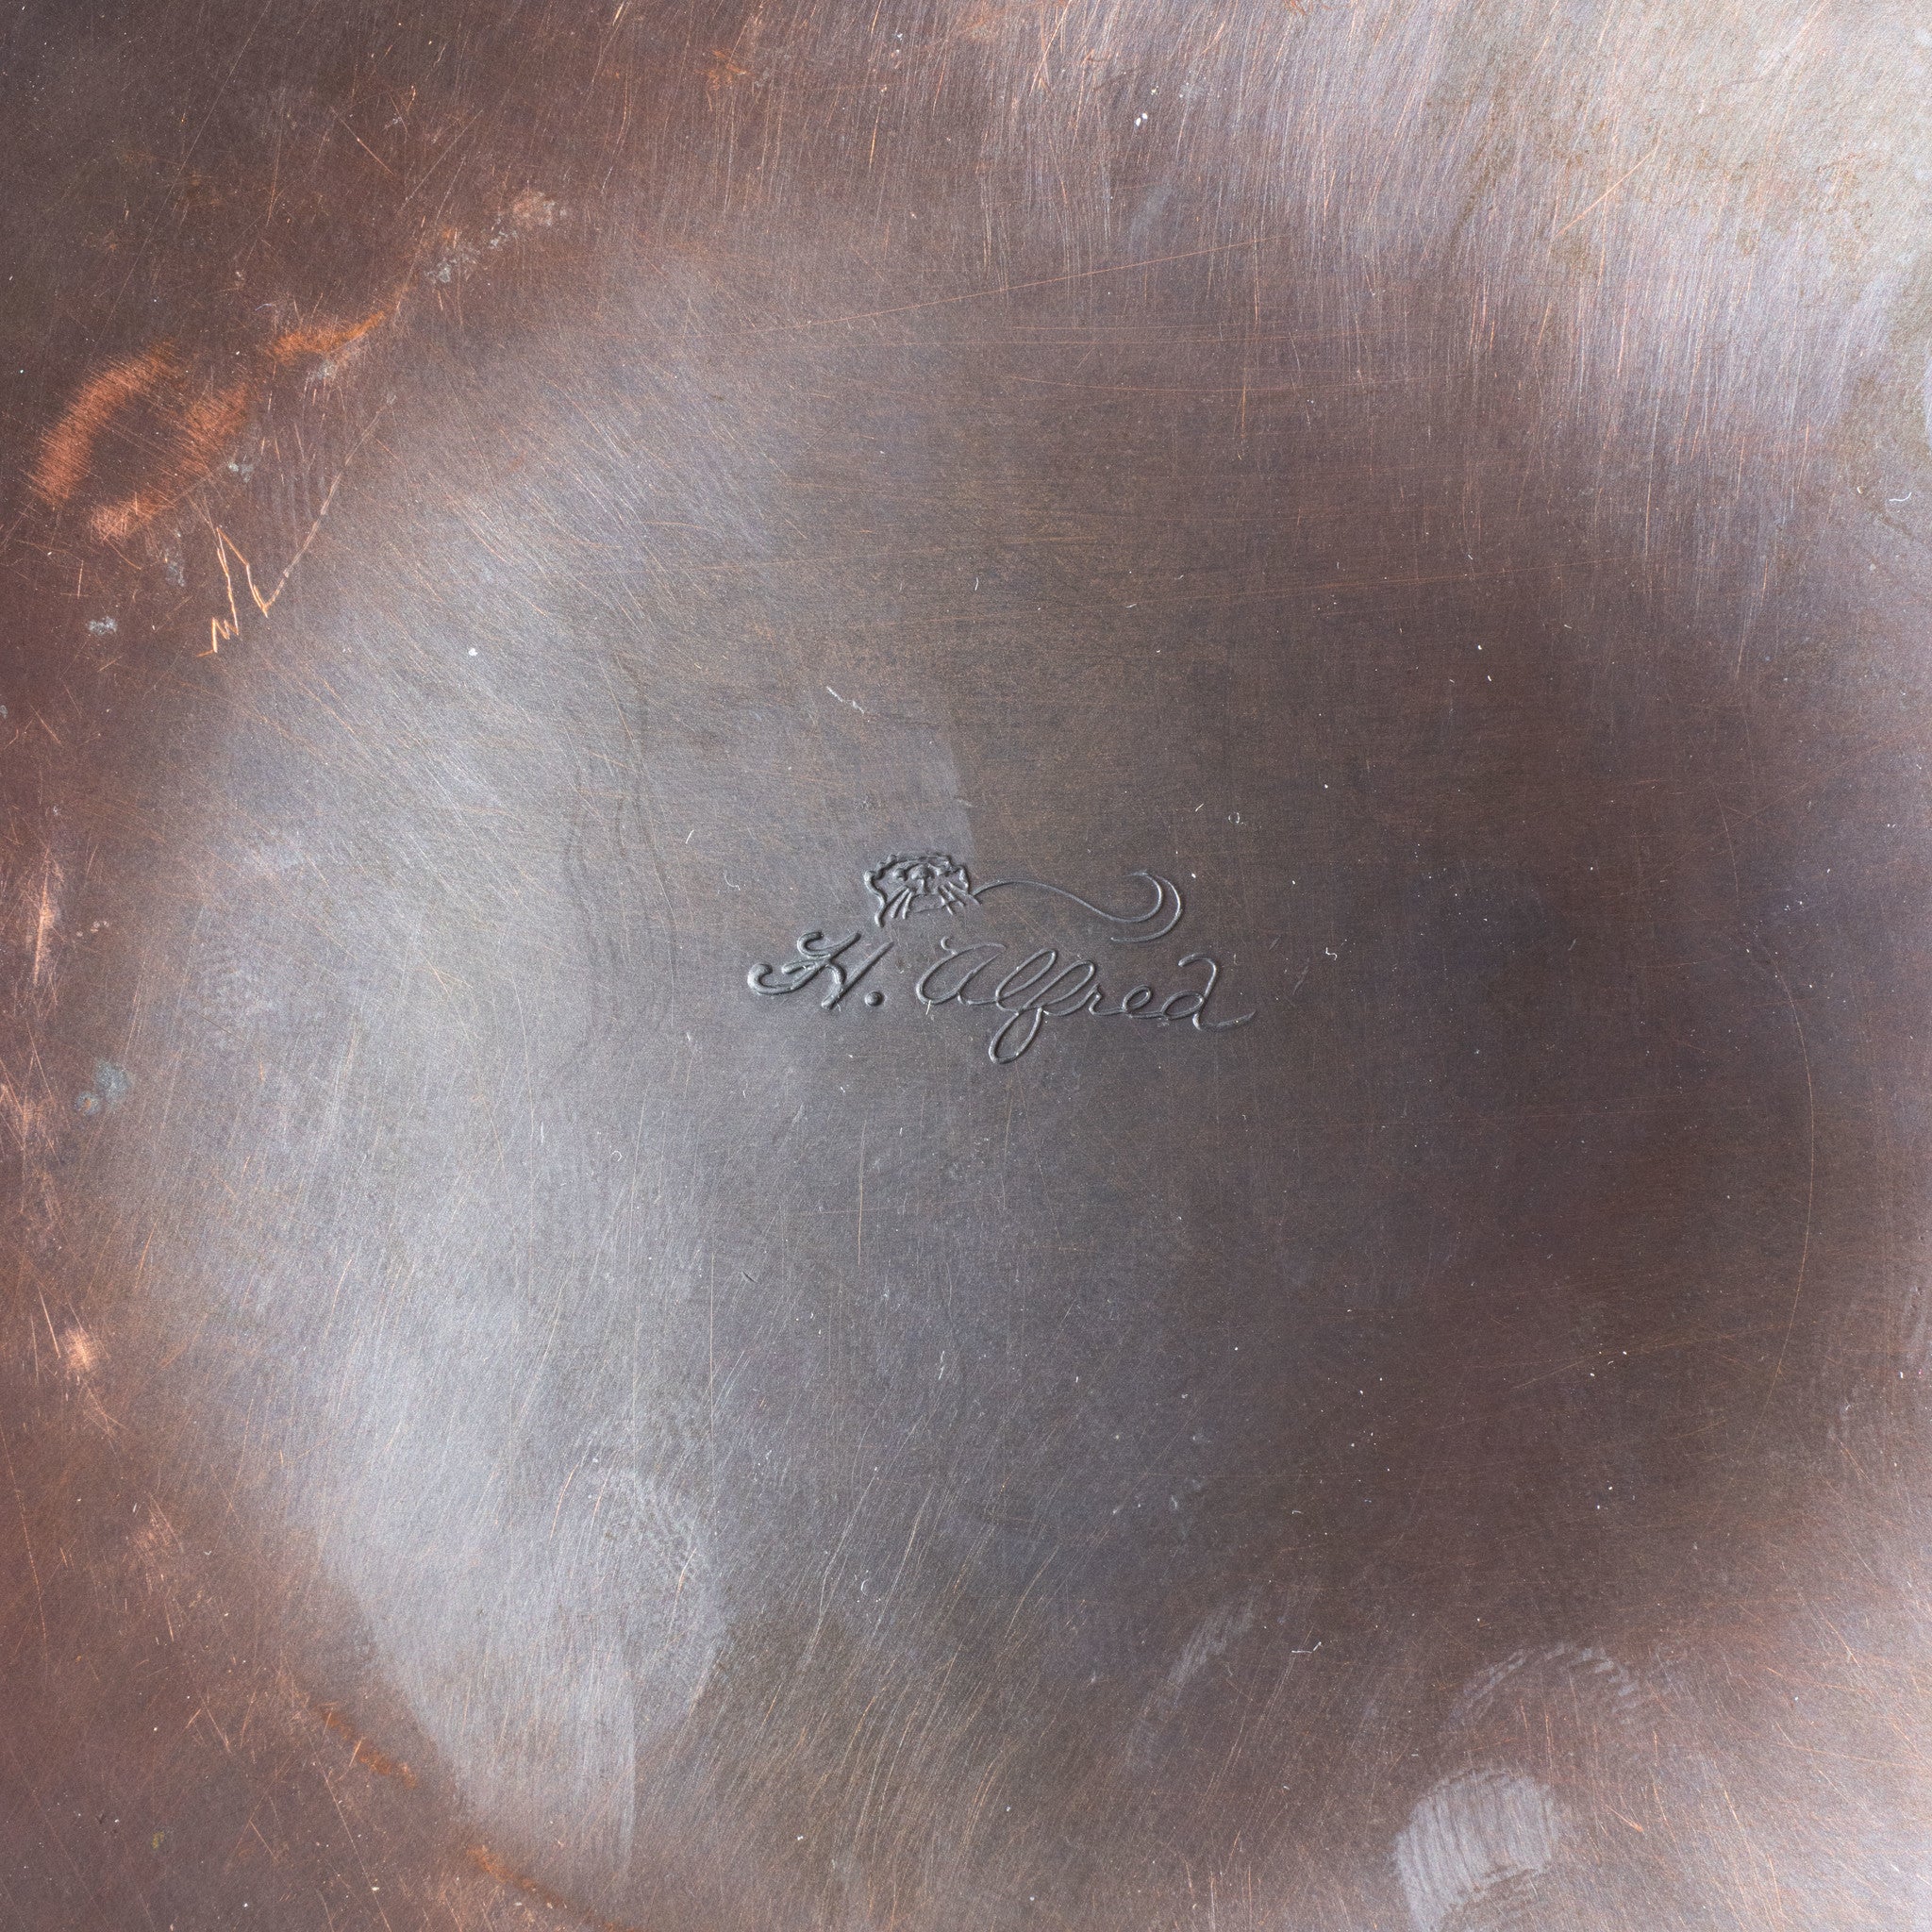 Kwakiutl Hammered Copper Bowl